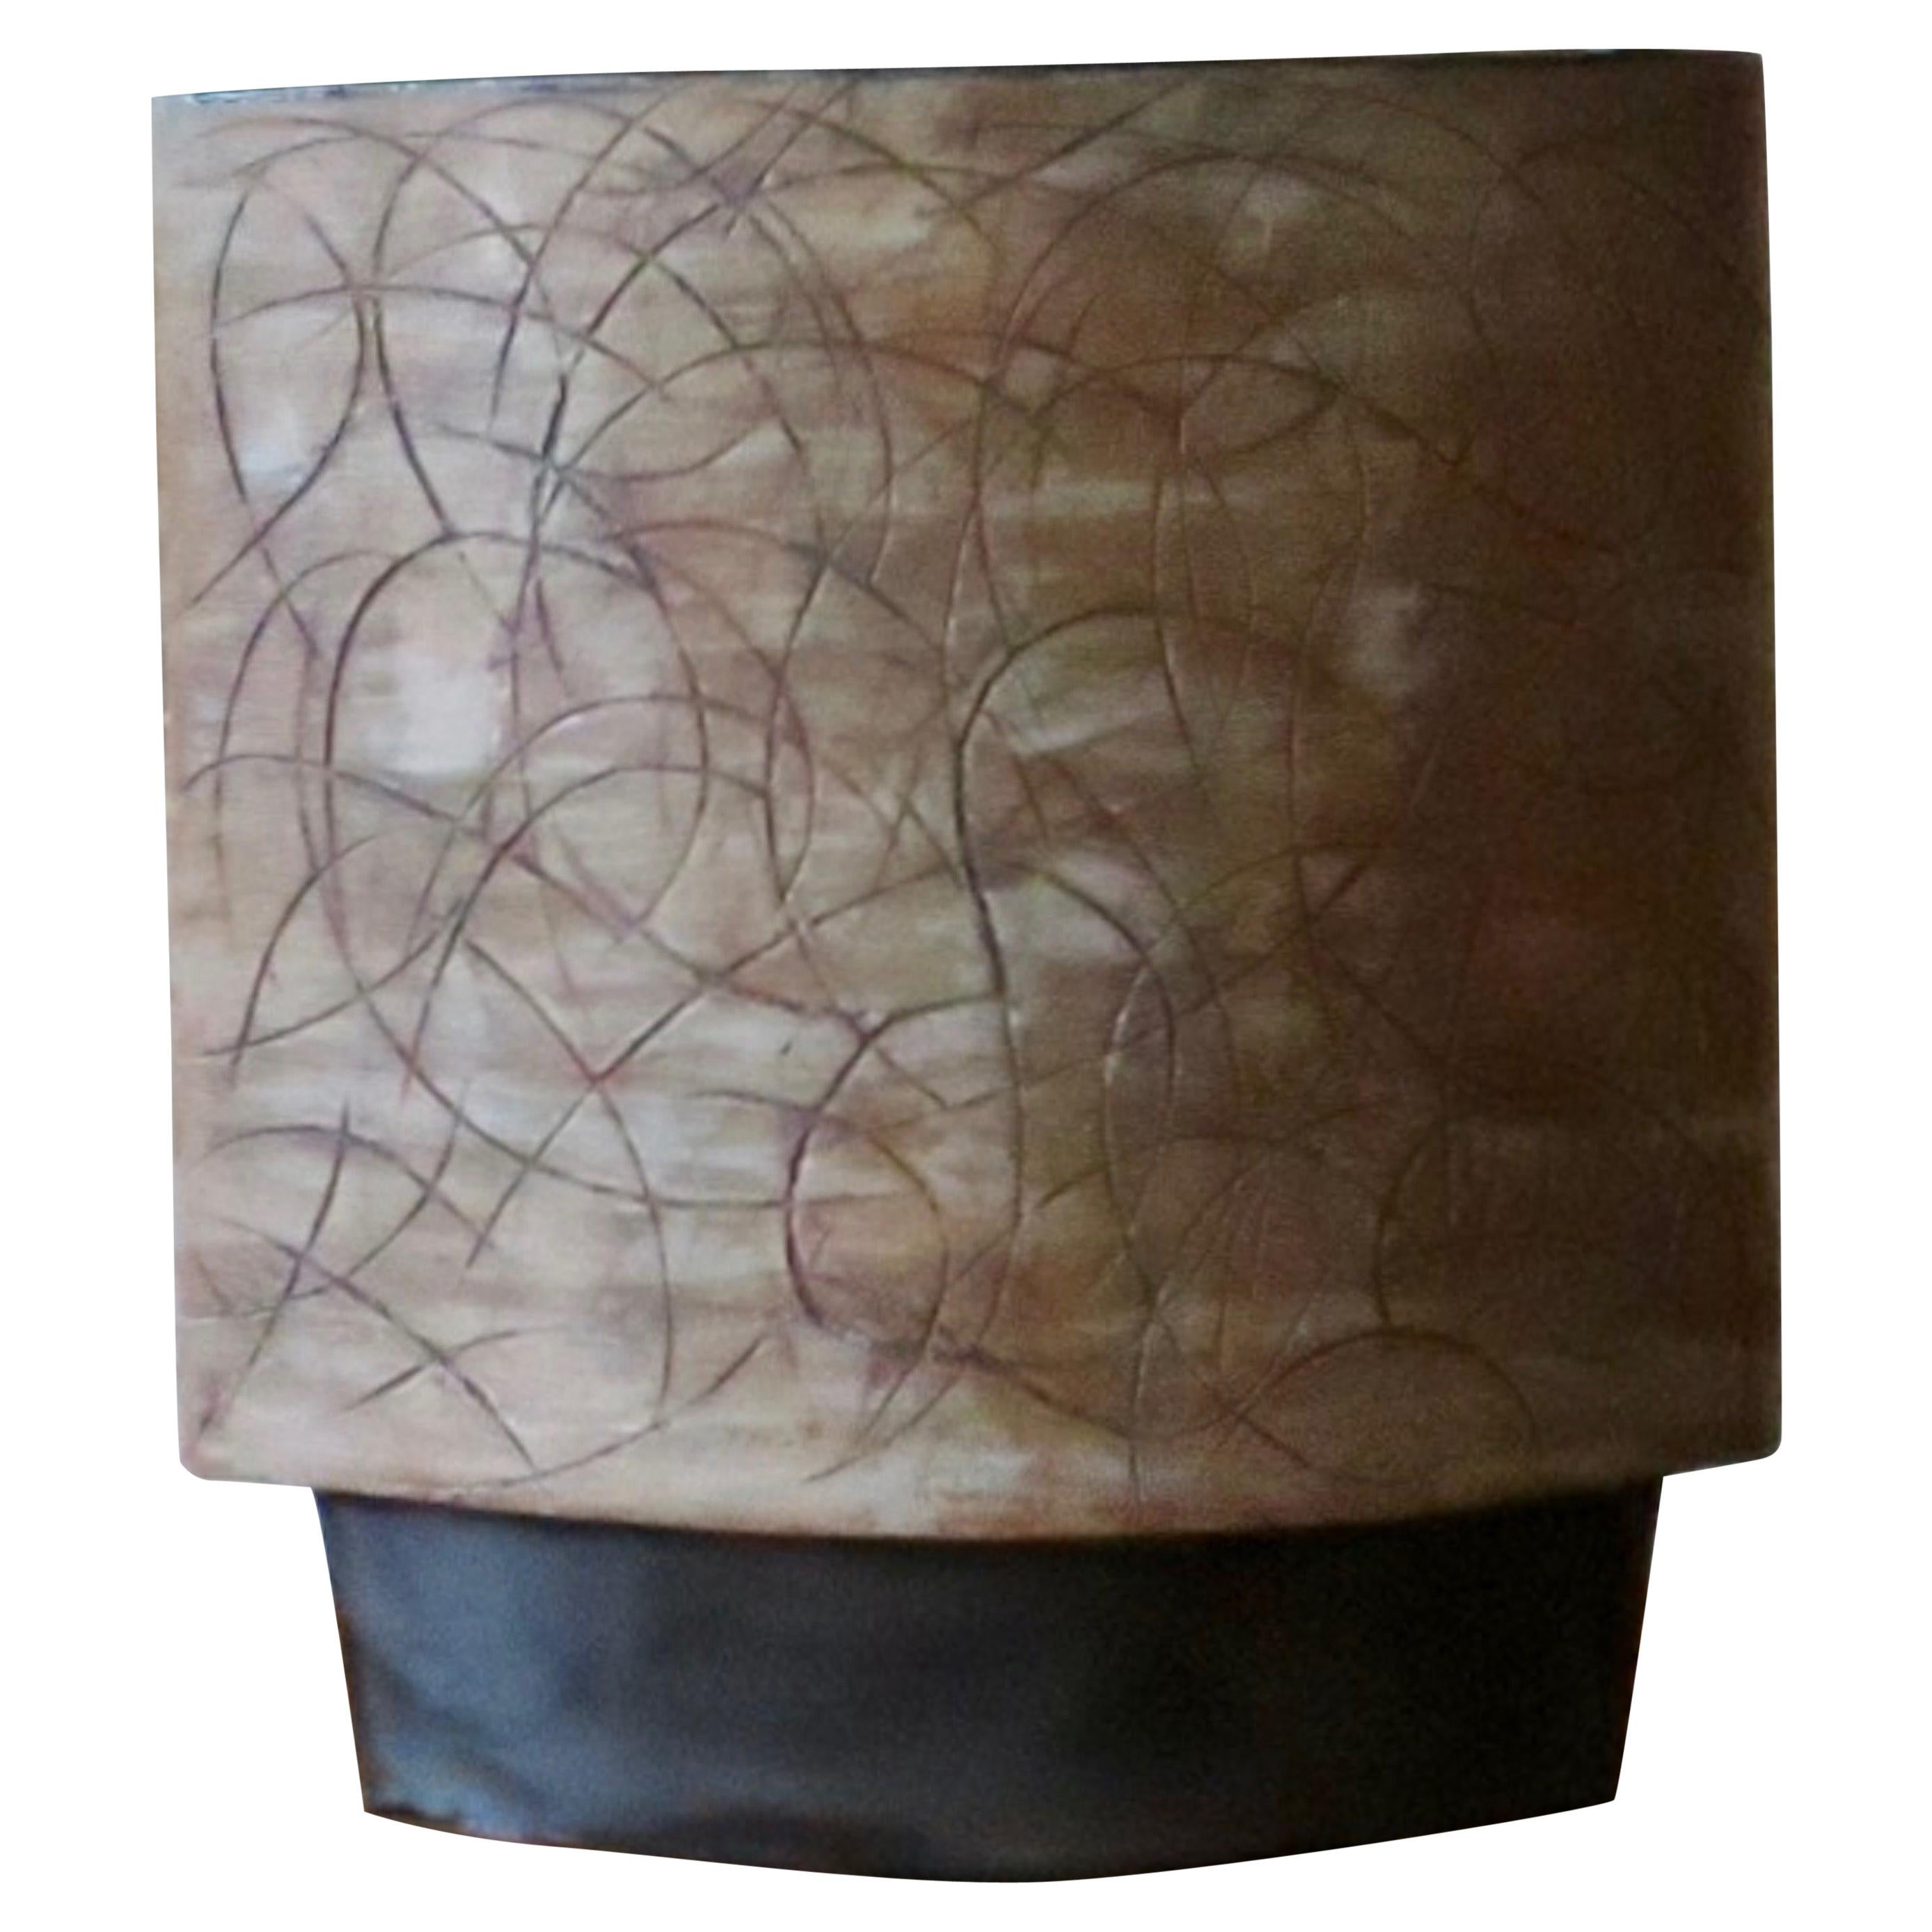 Large Hand Built "Jackson Pollack" Ceramic Vase, Brown Swirl Marks on Black Base